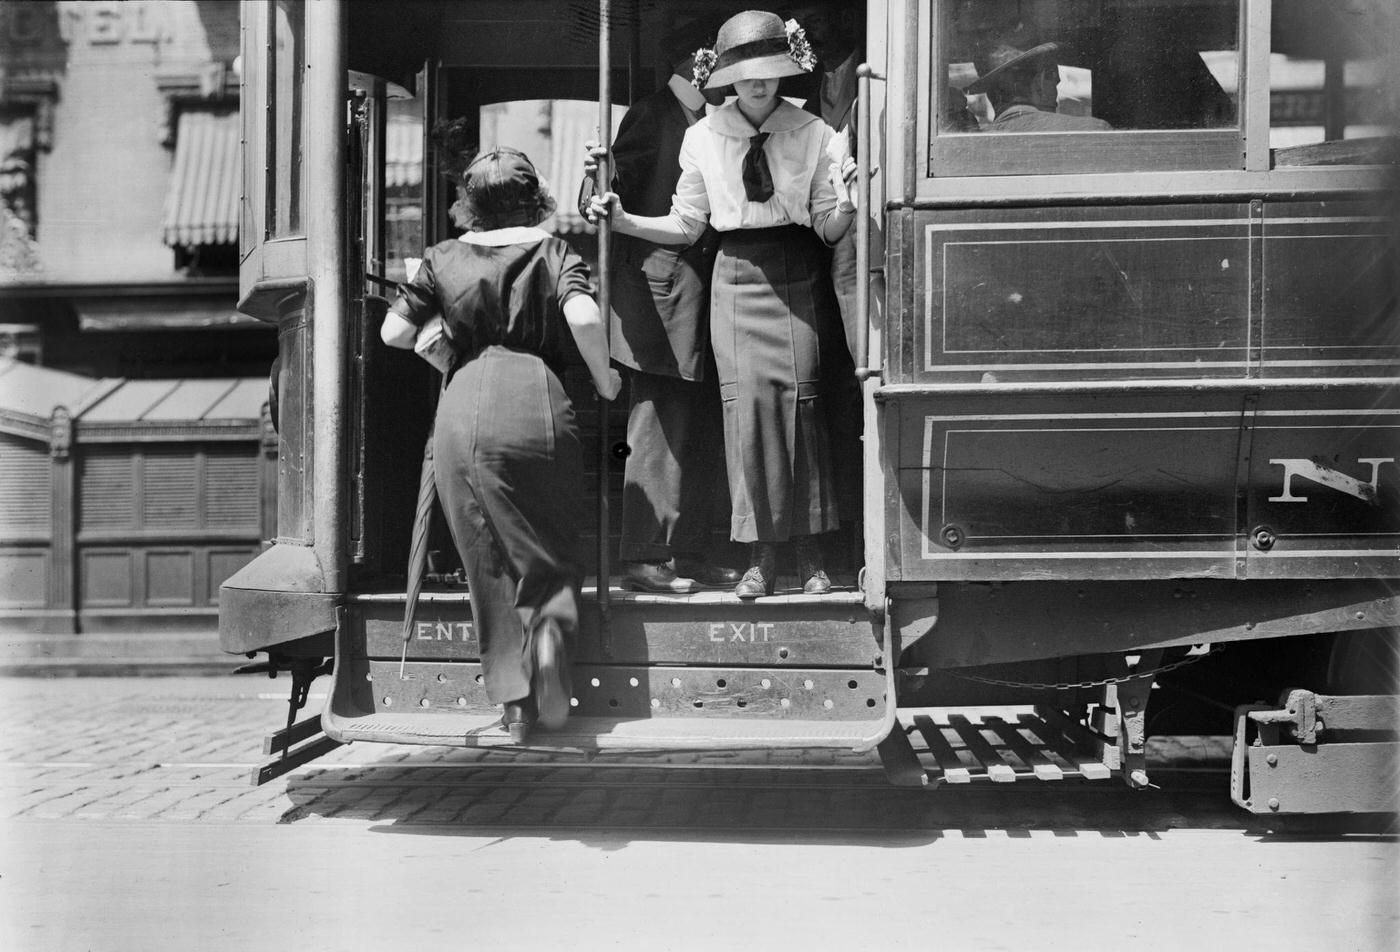 Two Women On Trolley Car, Broadway, New York City, 1915